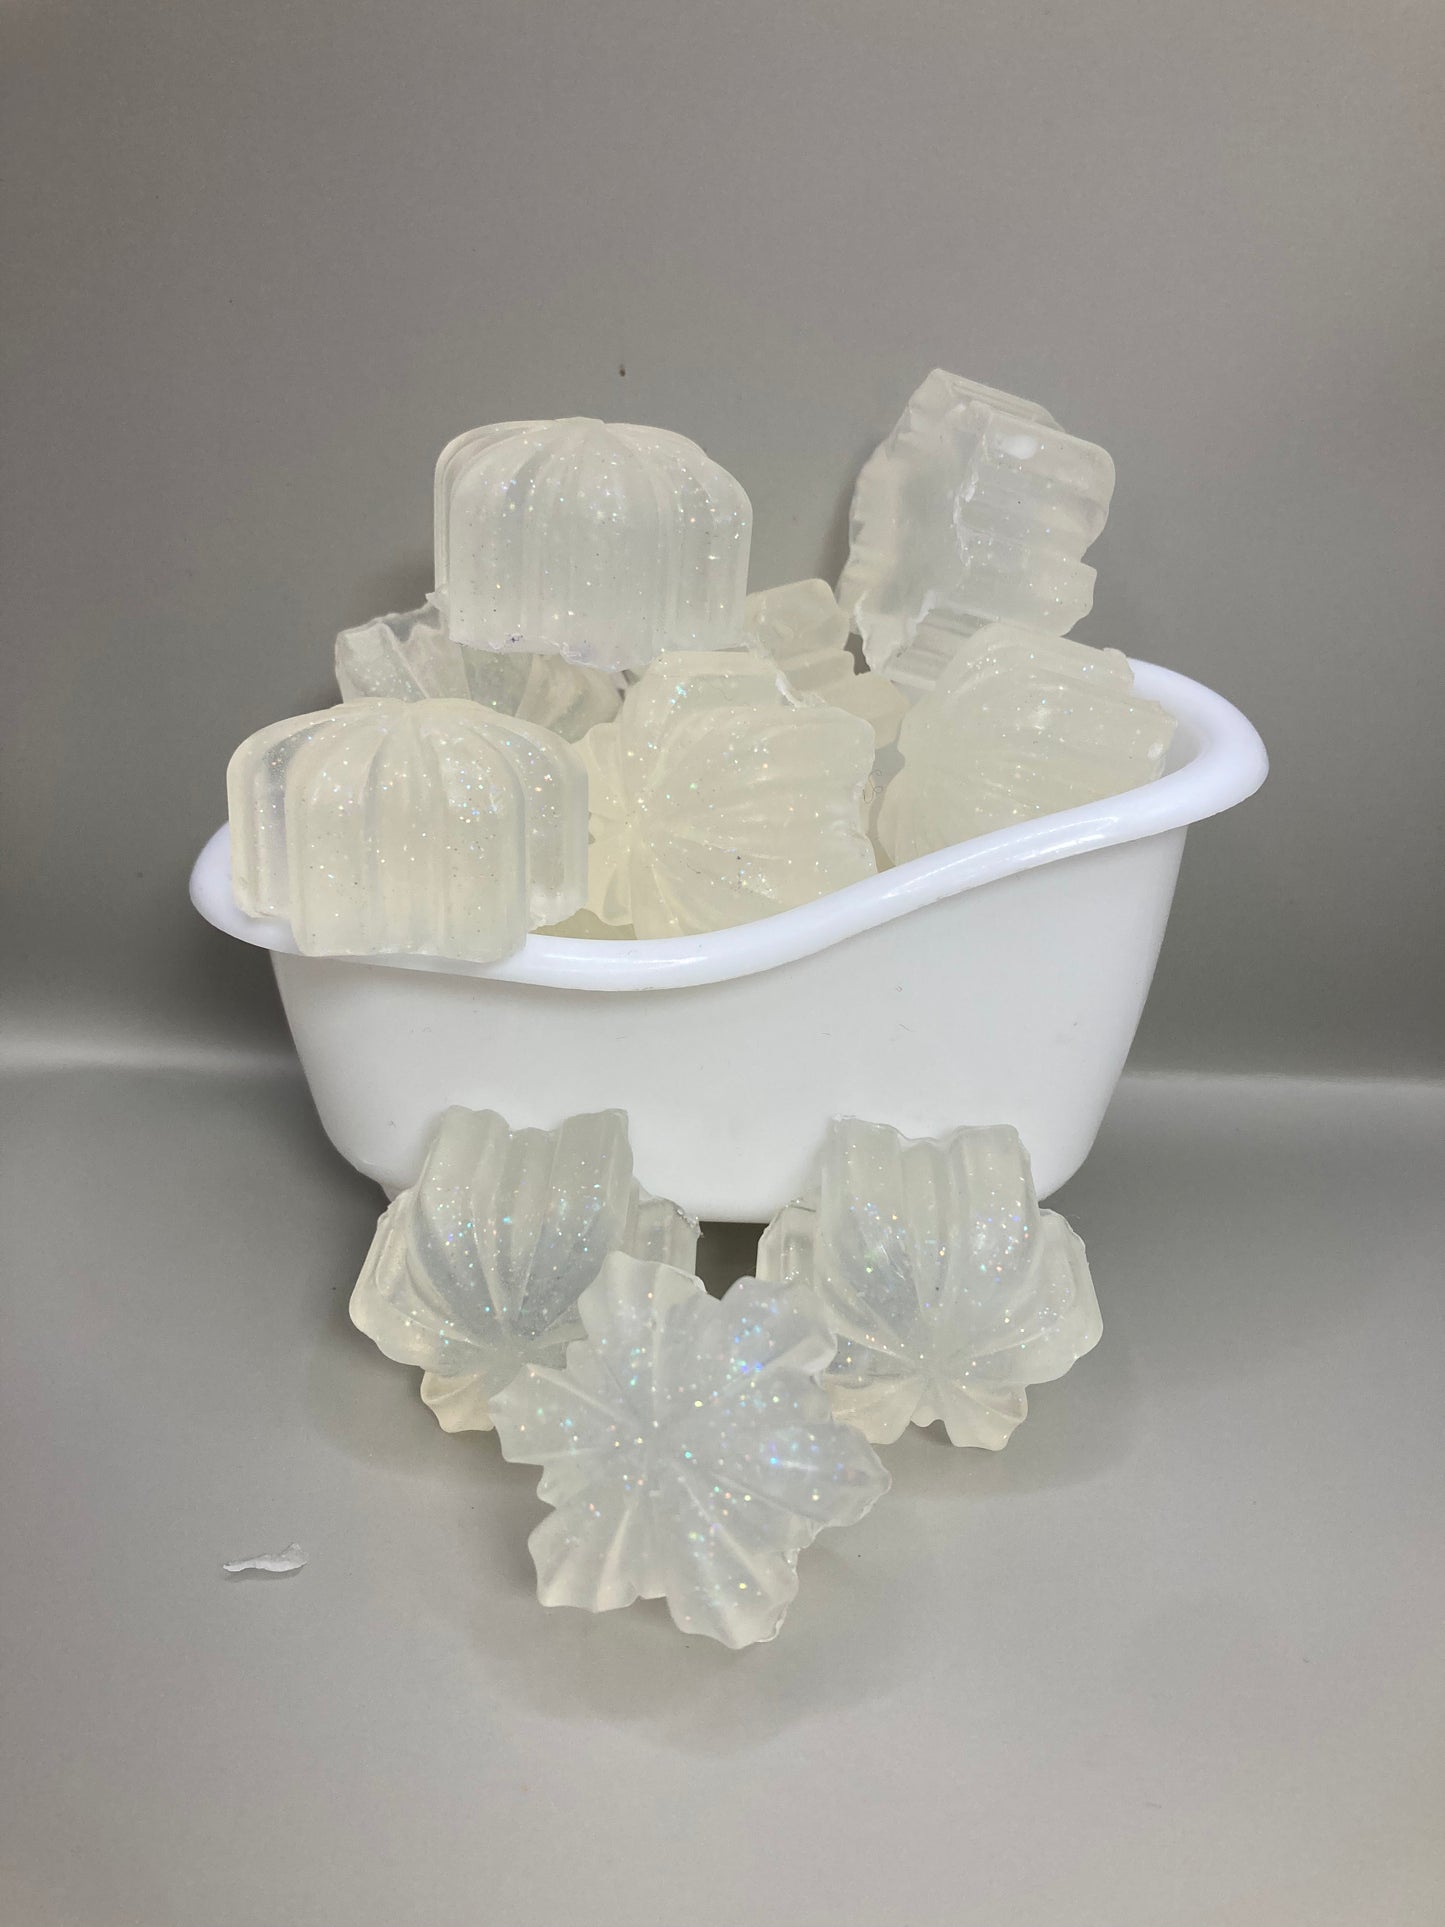 Snowflake shaped Glycerin Soap  $1